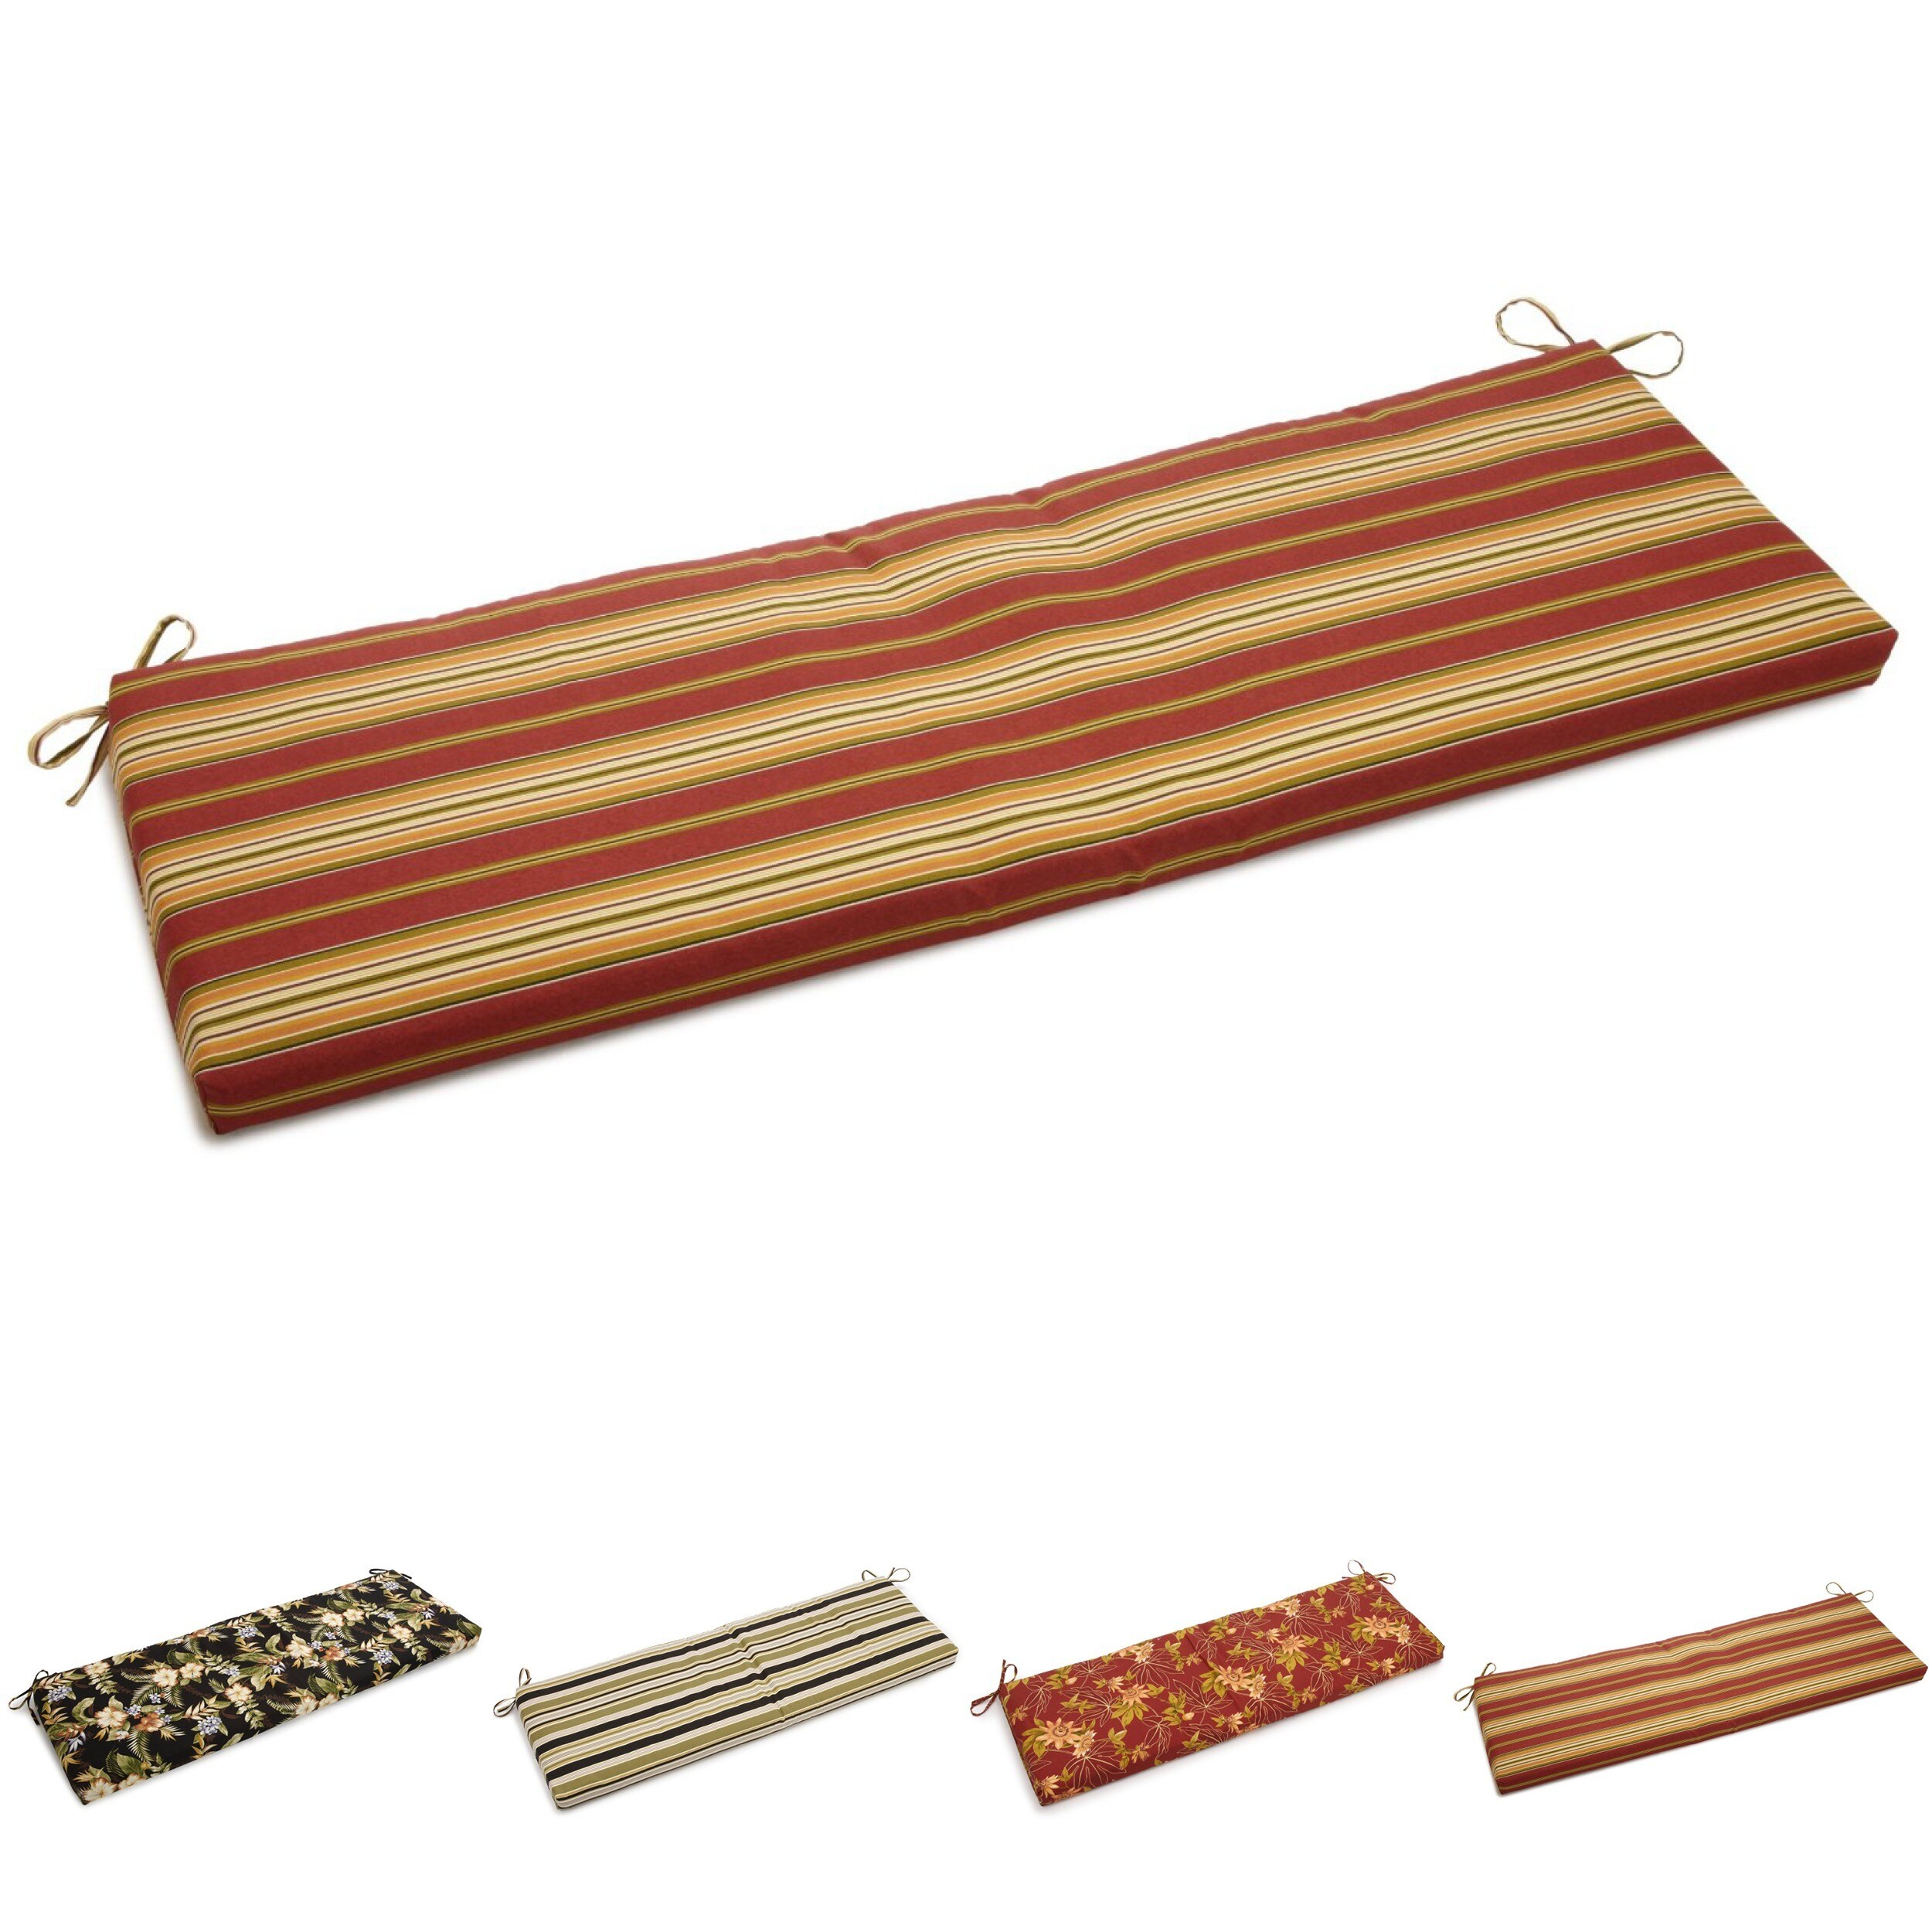 Blazing Needles 60-inch Solid Indoor Bench Cushion - 60 x 19 - Bed Bath &  Beyond - 8583838